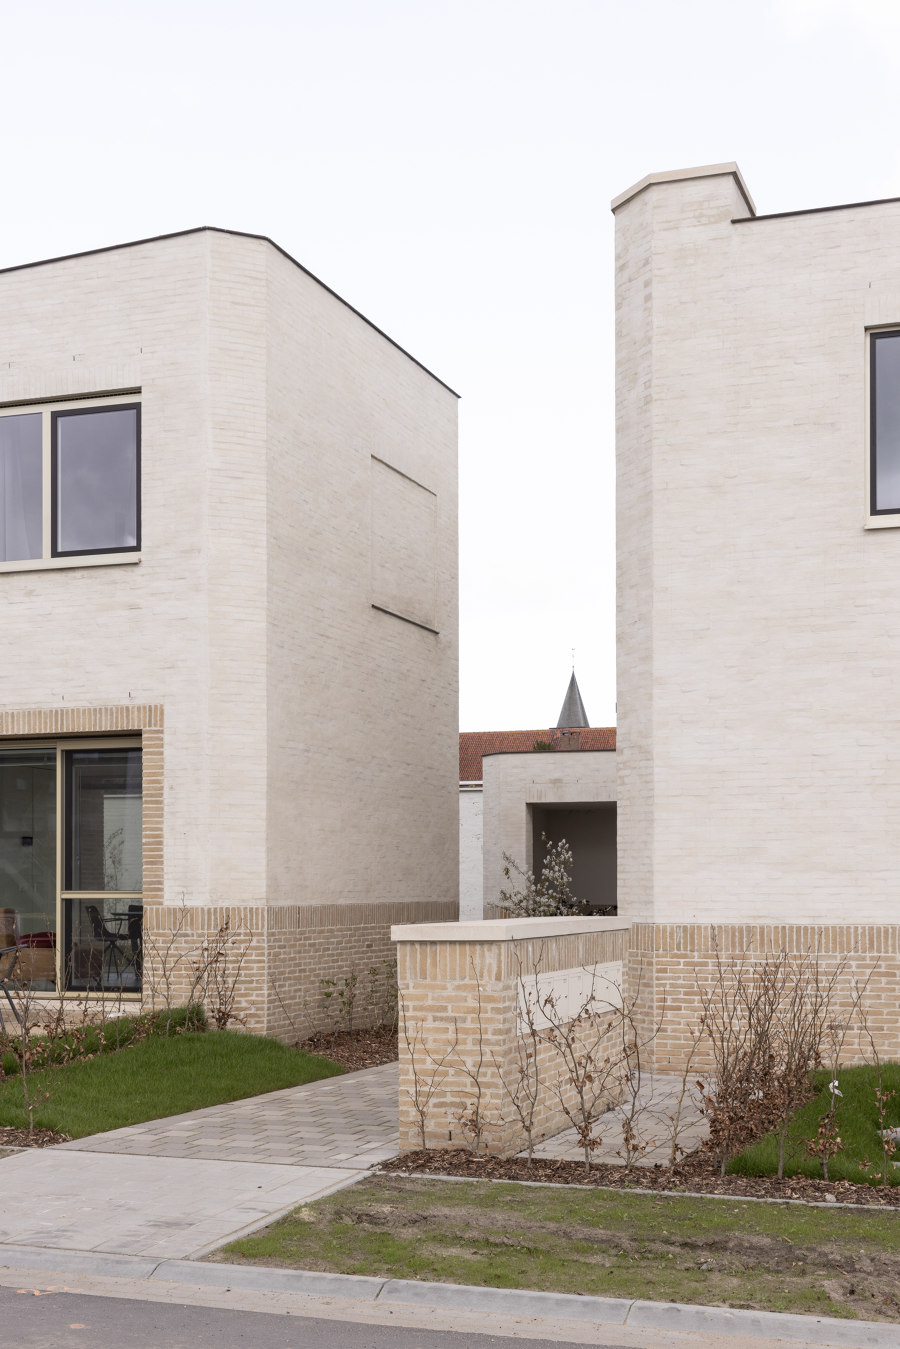 Ten Boomgaard Housing di WE-S architecten | Case plurifamiliari